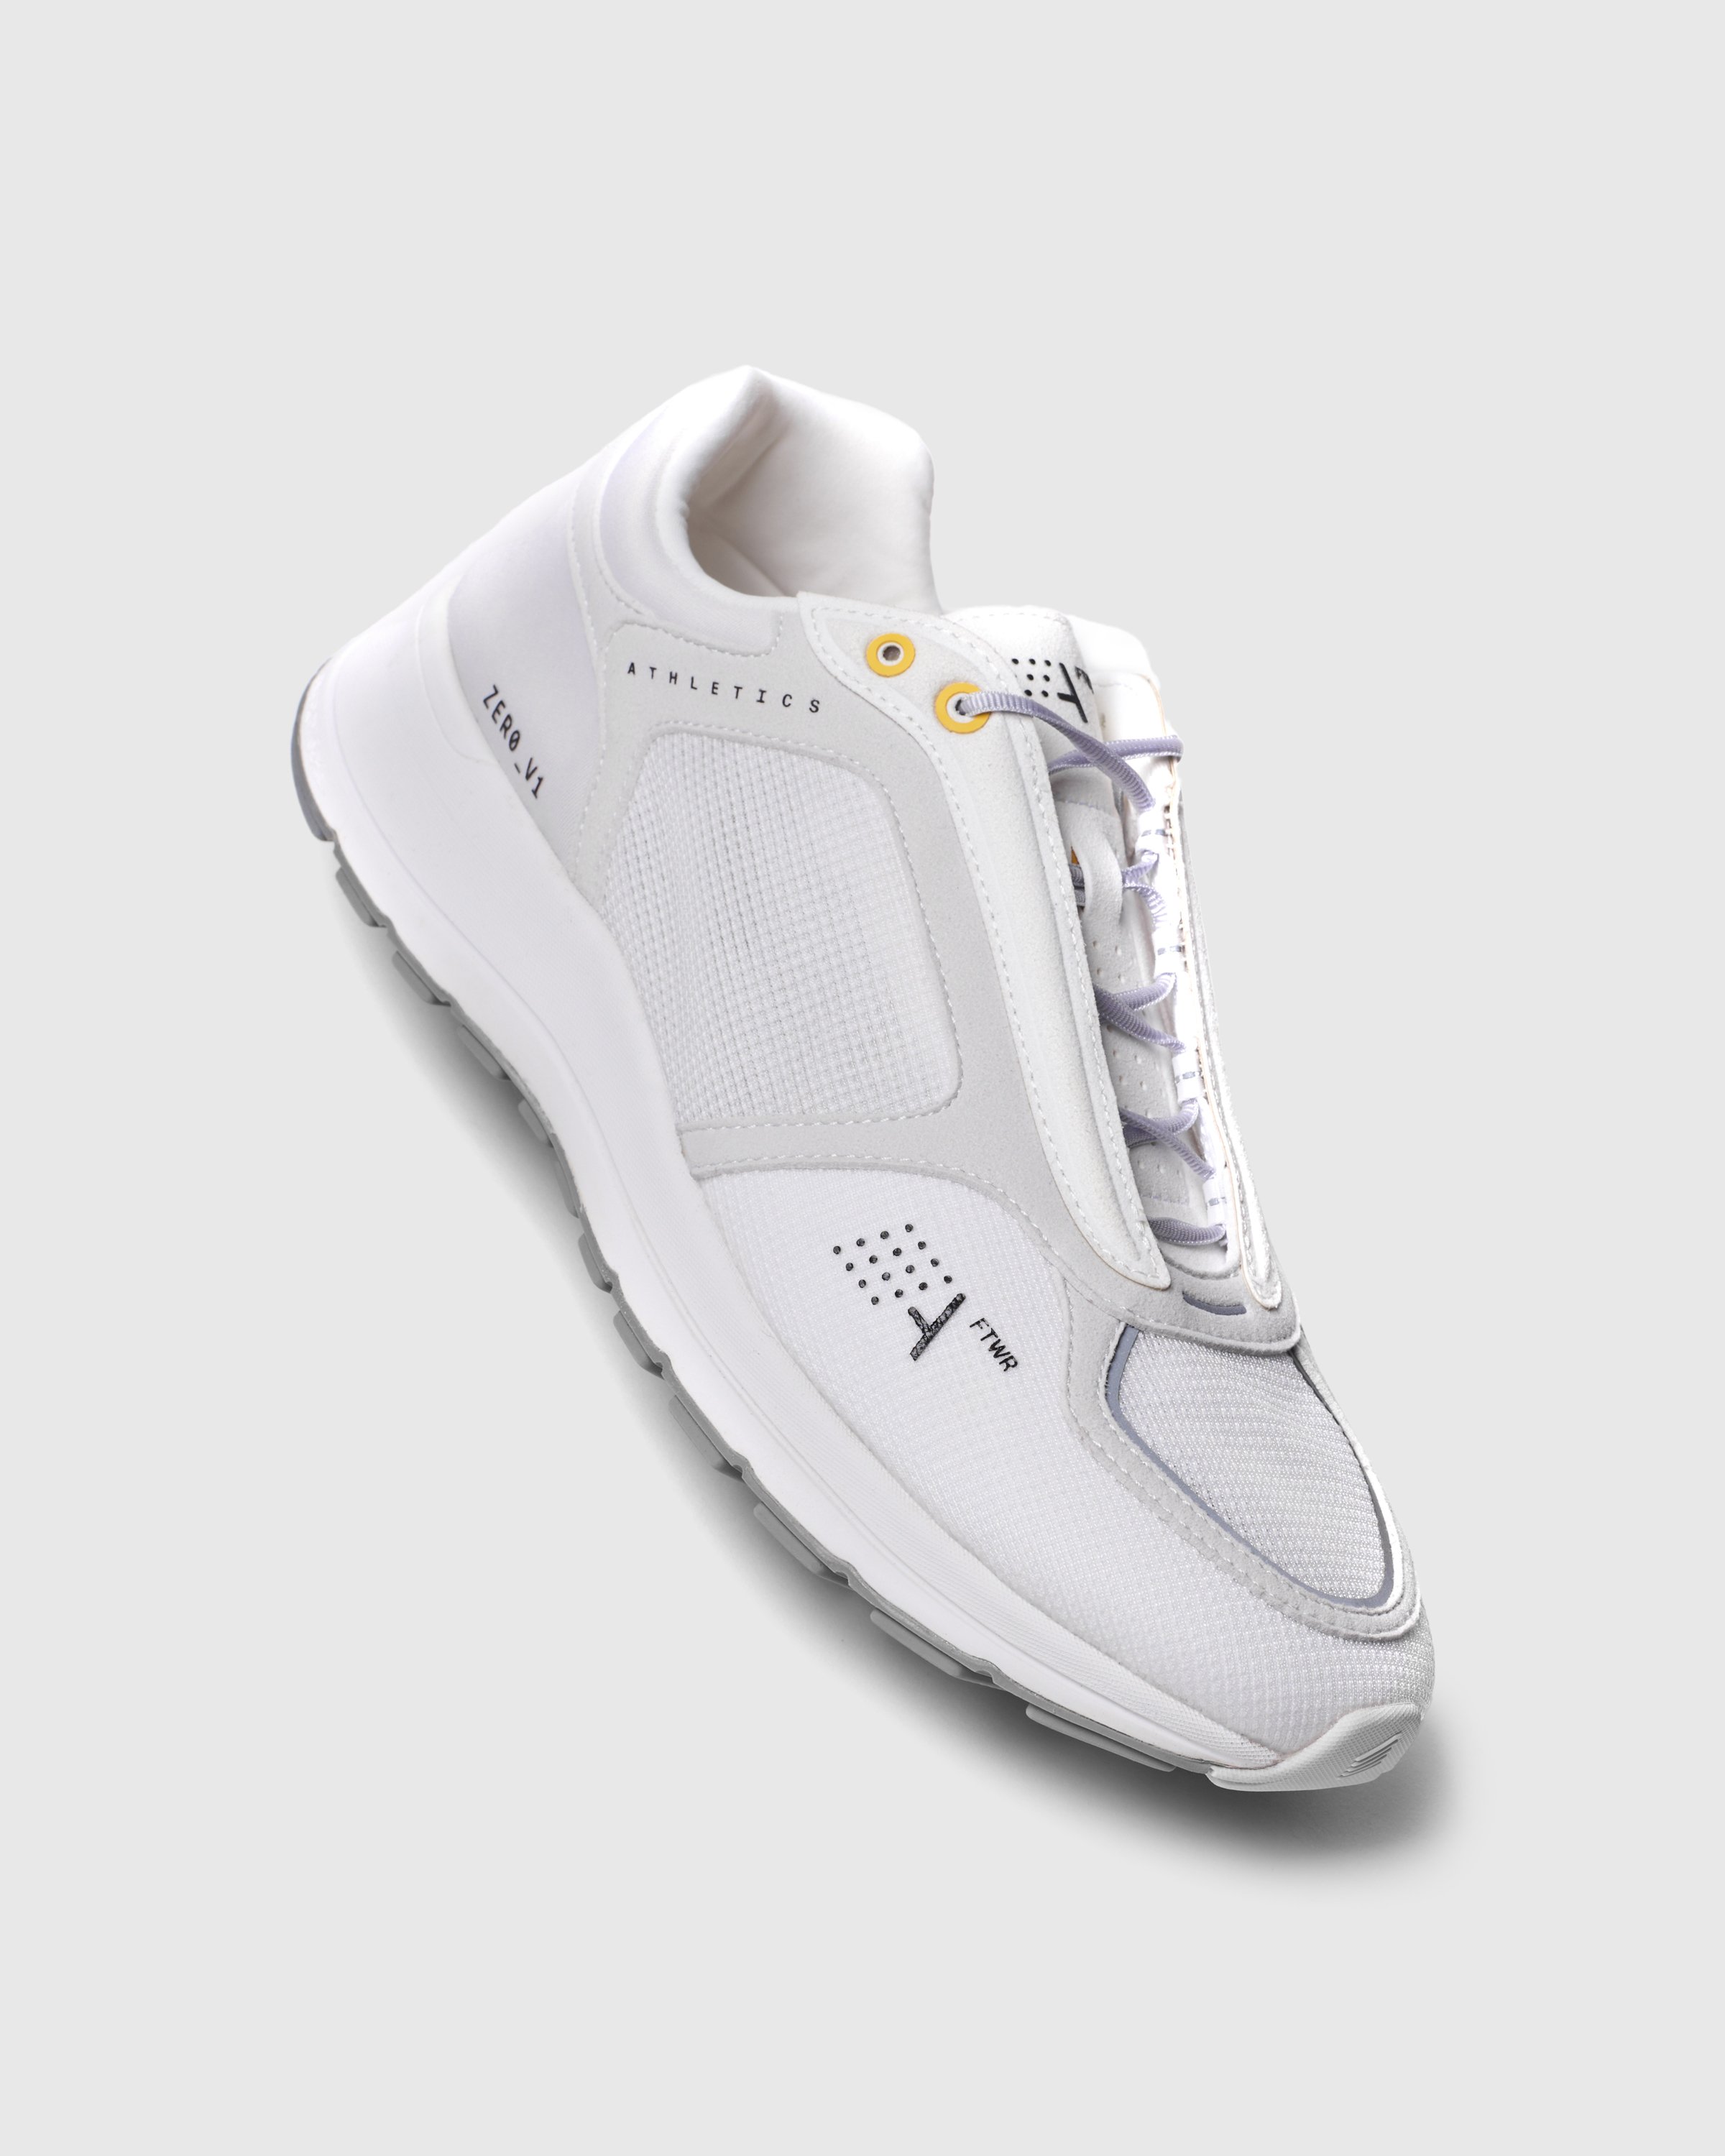 Athletics Footwear - Zero V1 White - Footwear - White - Image 3